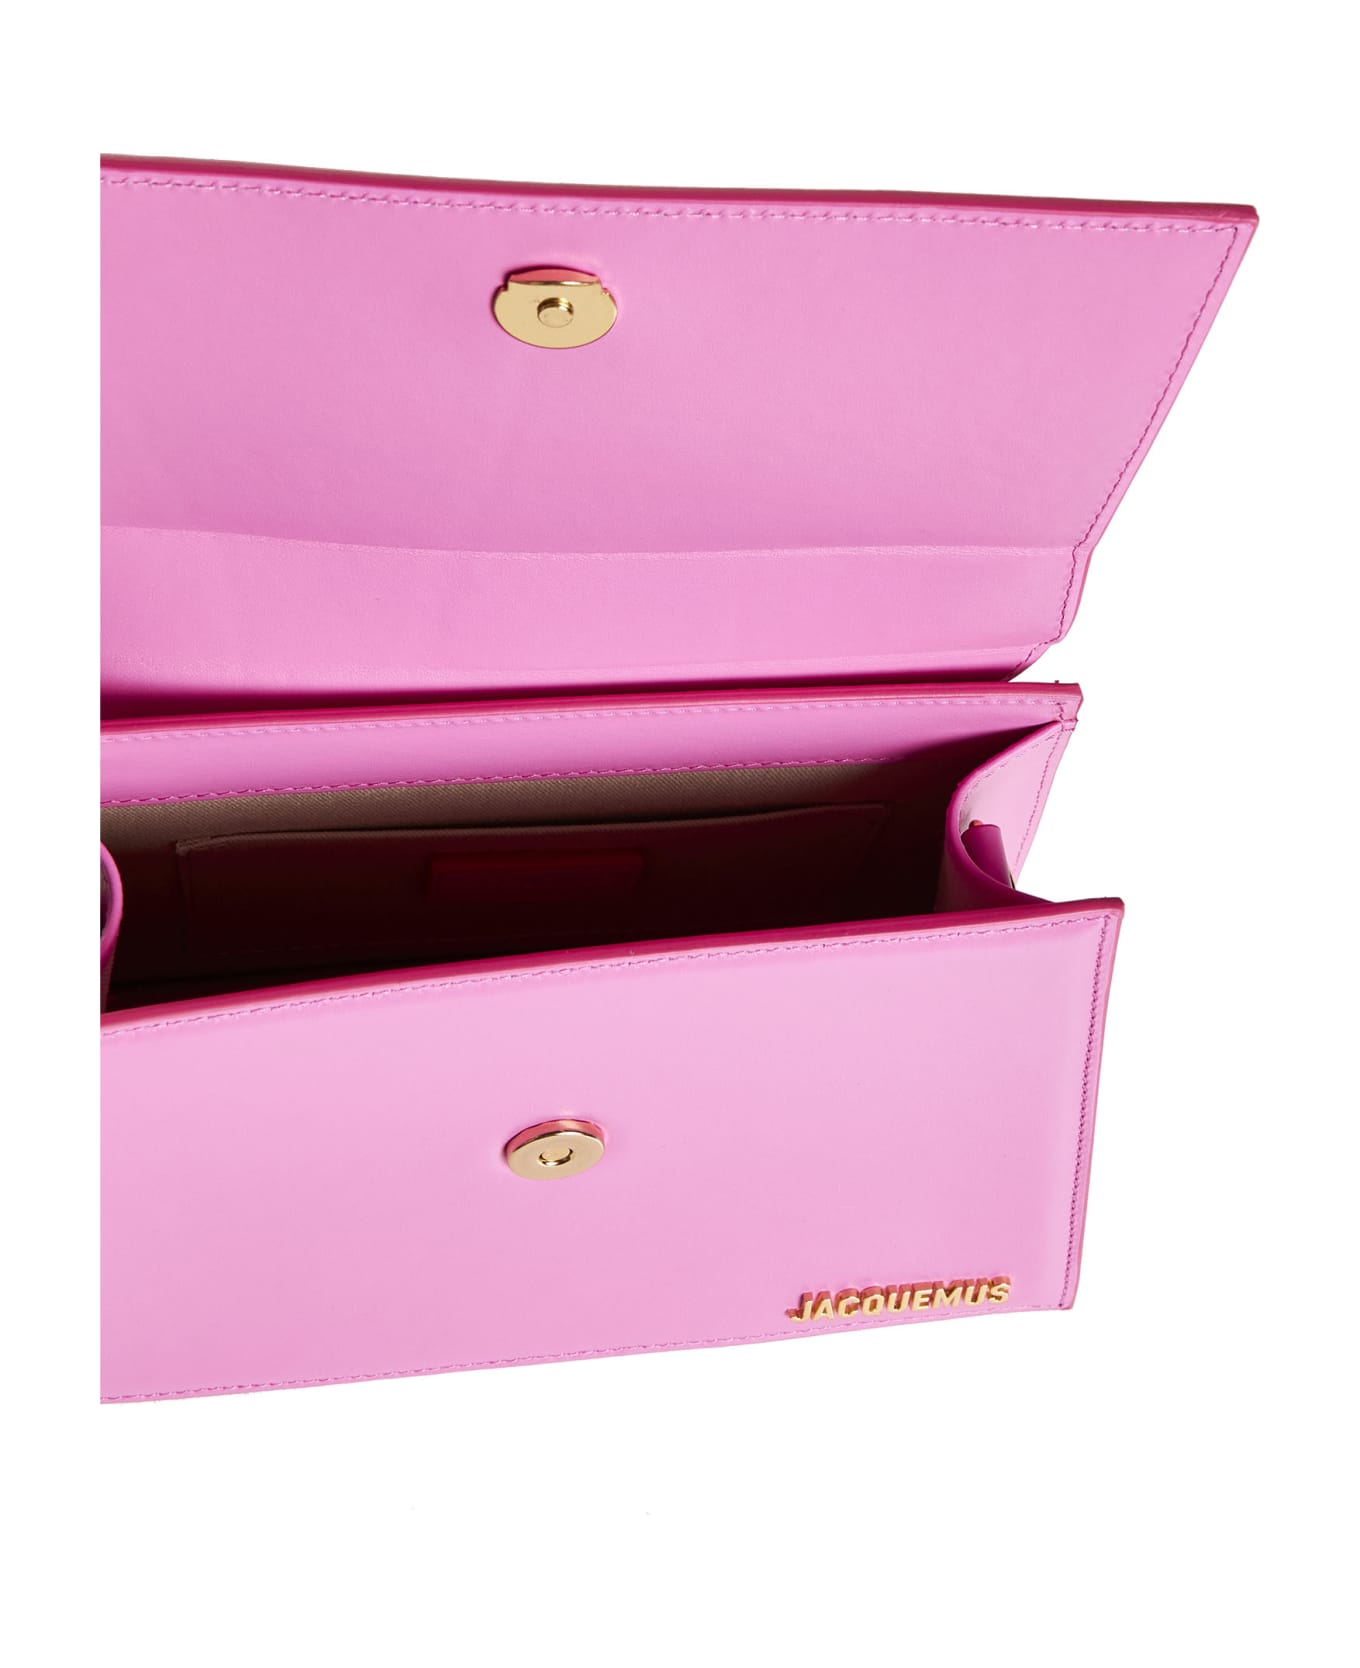 Jacquemus Le Grand Chiquito Shoulder Bag - Neon pink